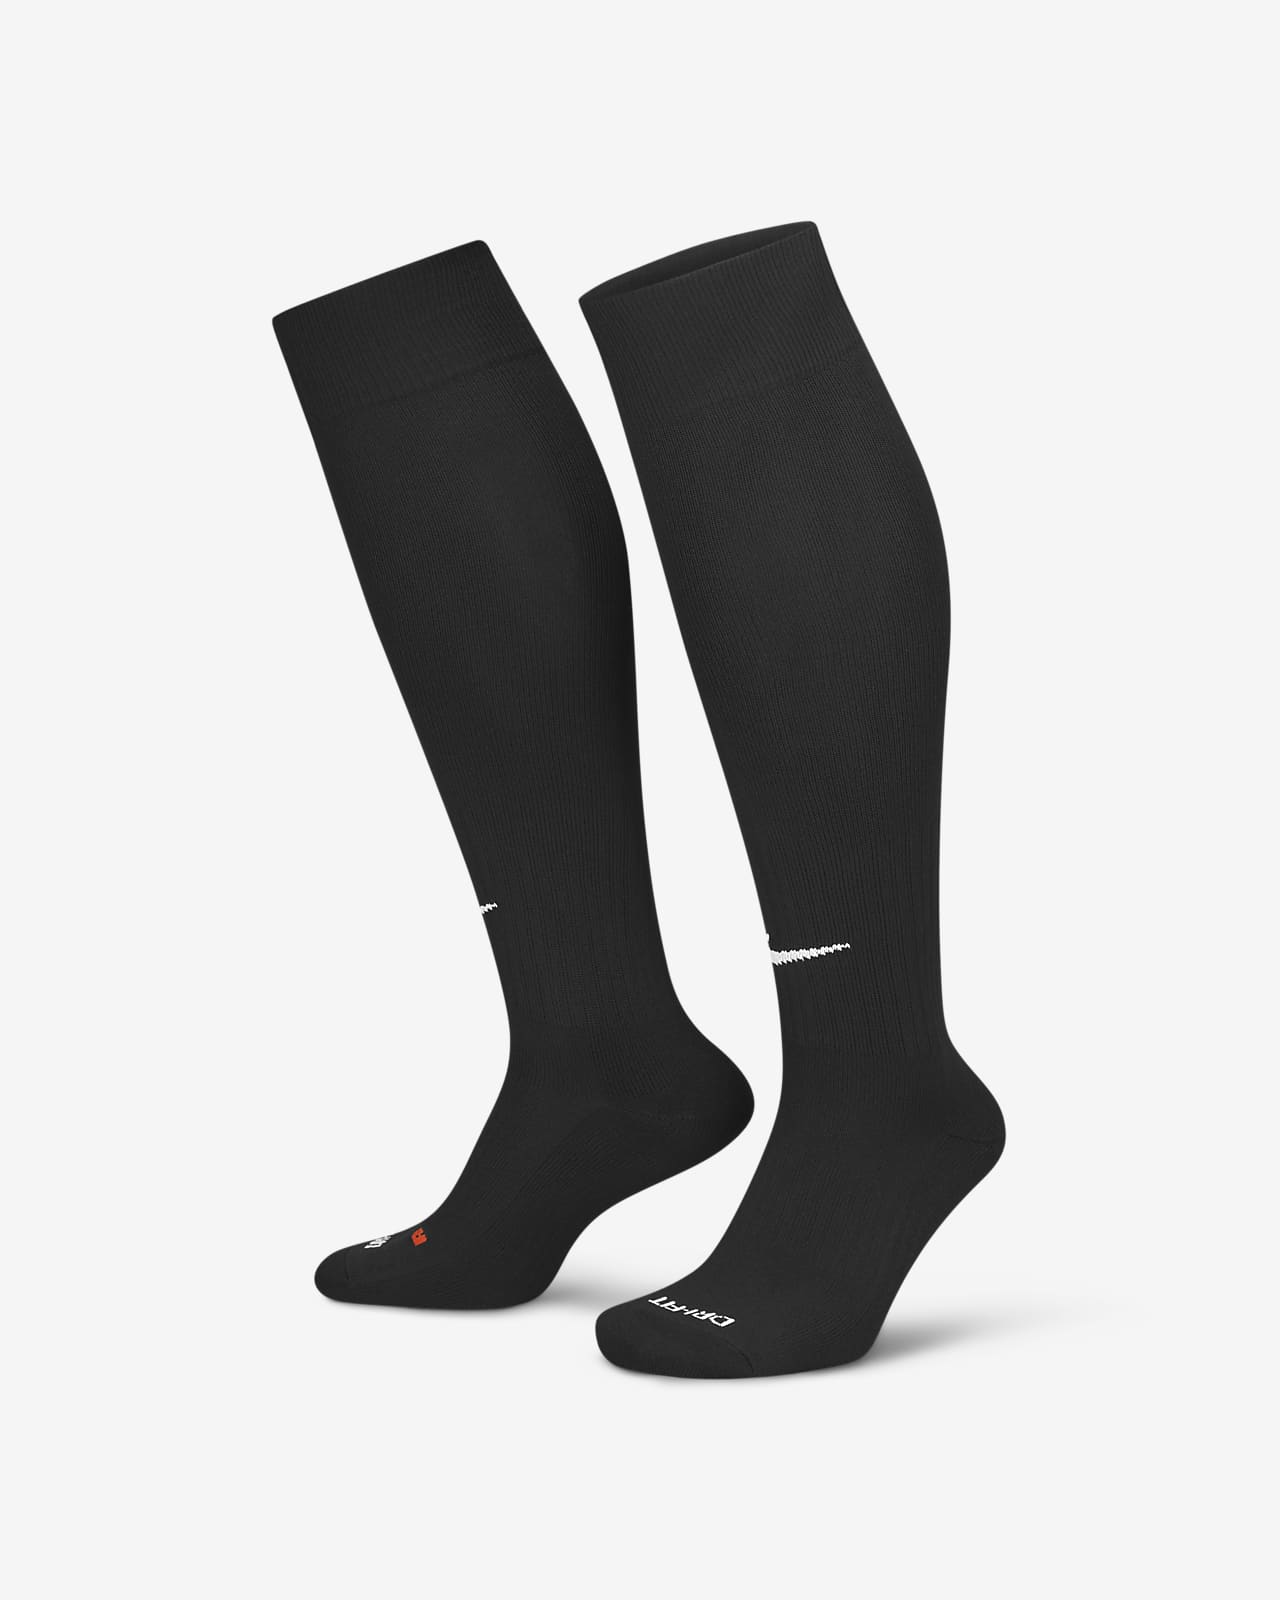 Nike Football Socks NikeGRIP Strike Lightweight Crew - Midnight Navy/White